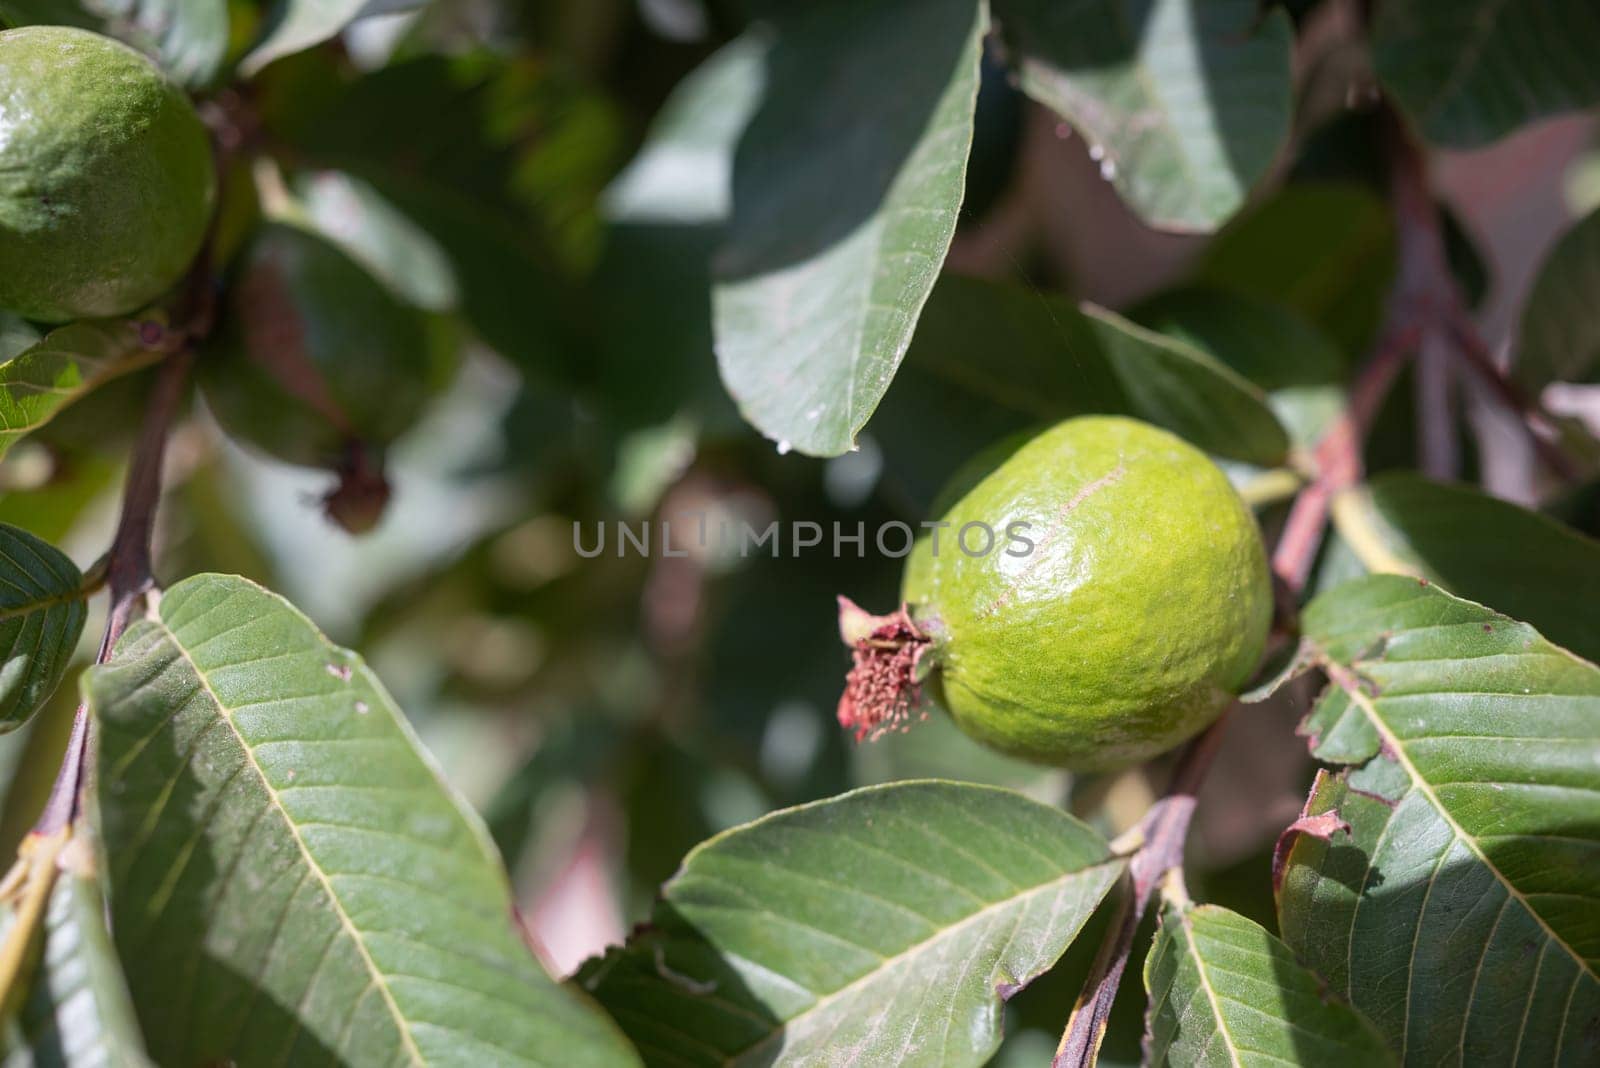 Guava fruit growing on a tree branch among green leaves. Psidium guajava by amovitania